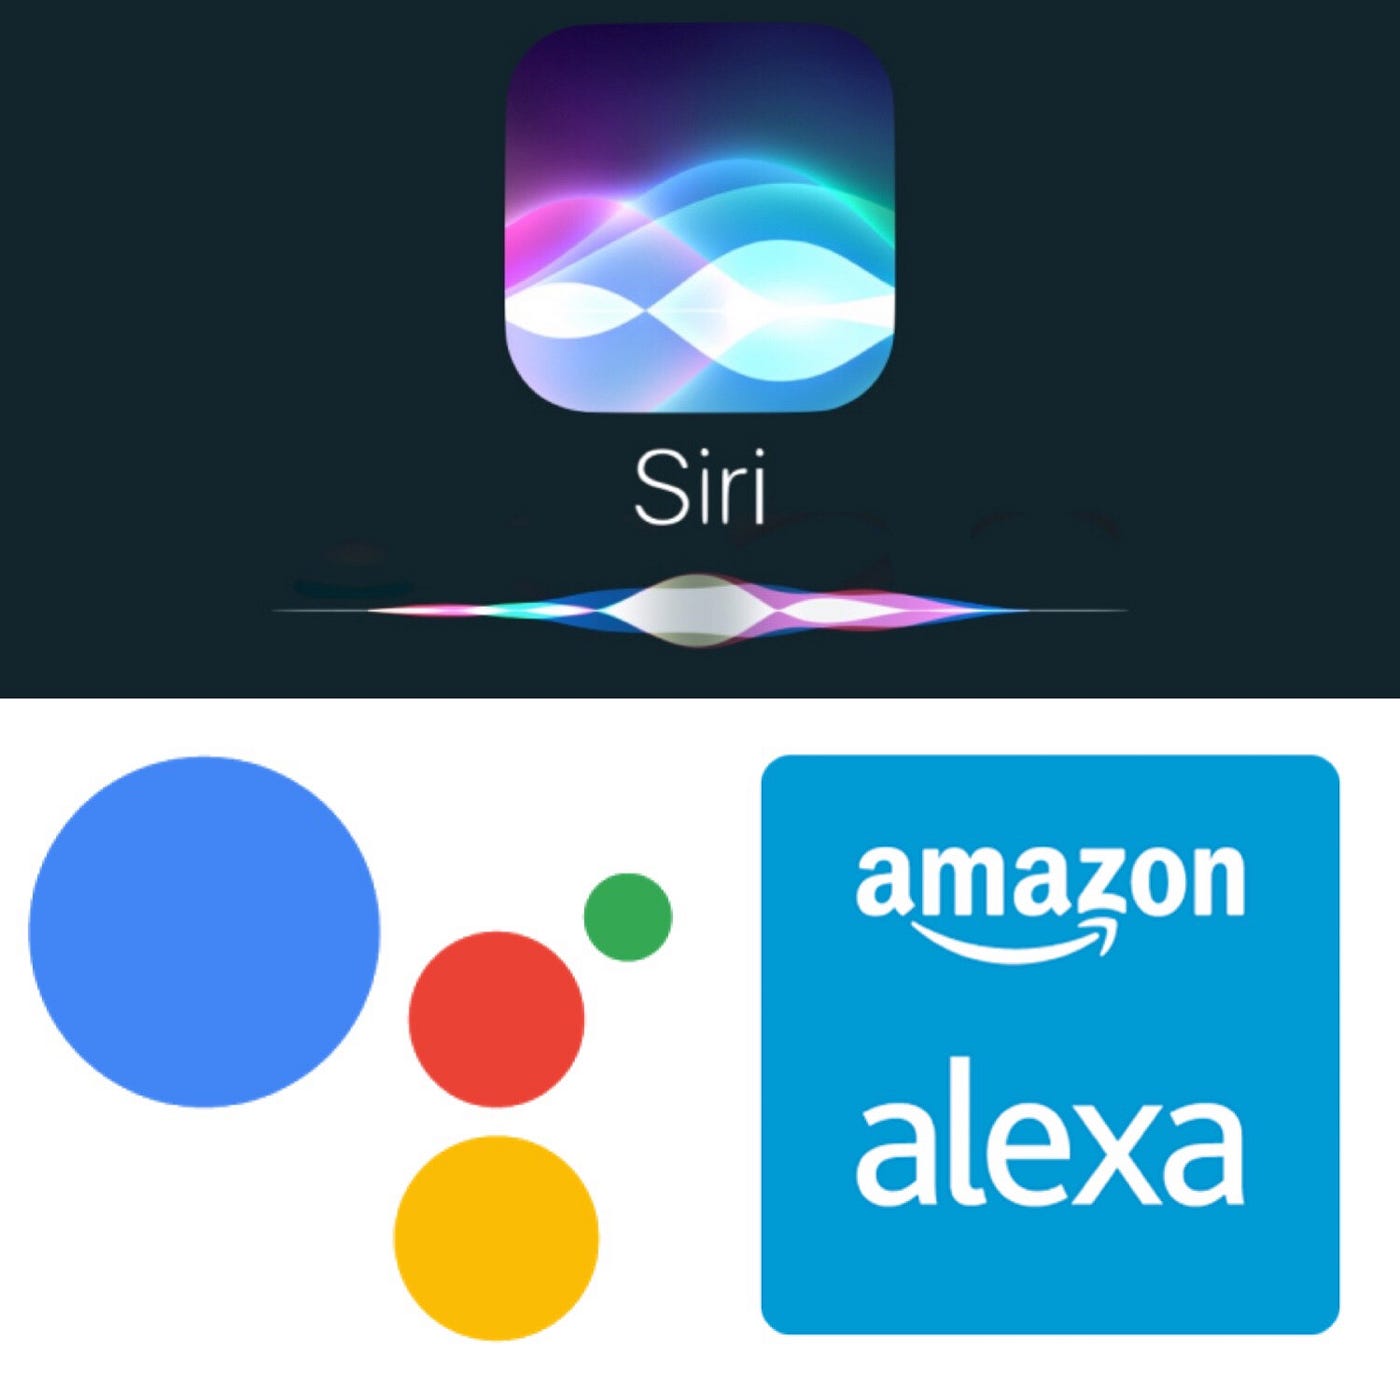 Is Alexa AI?, Is Siri AI?